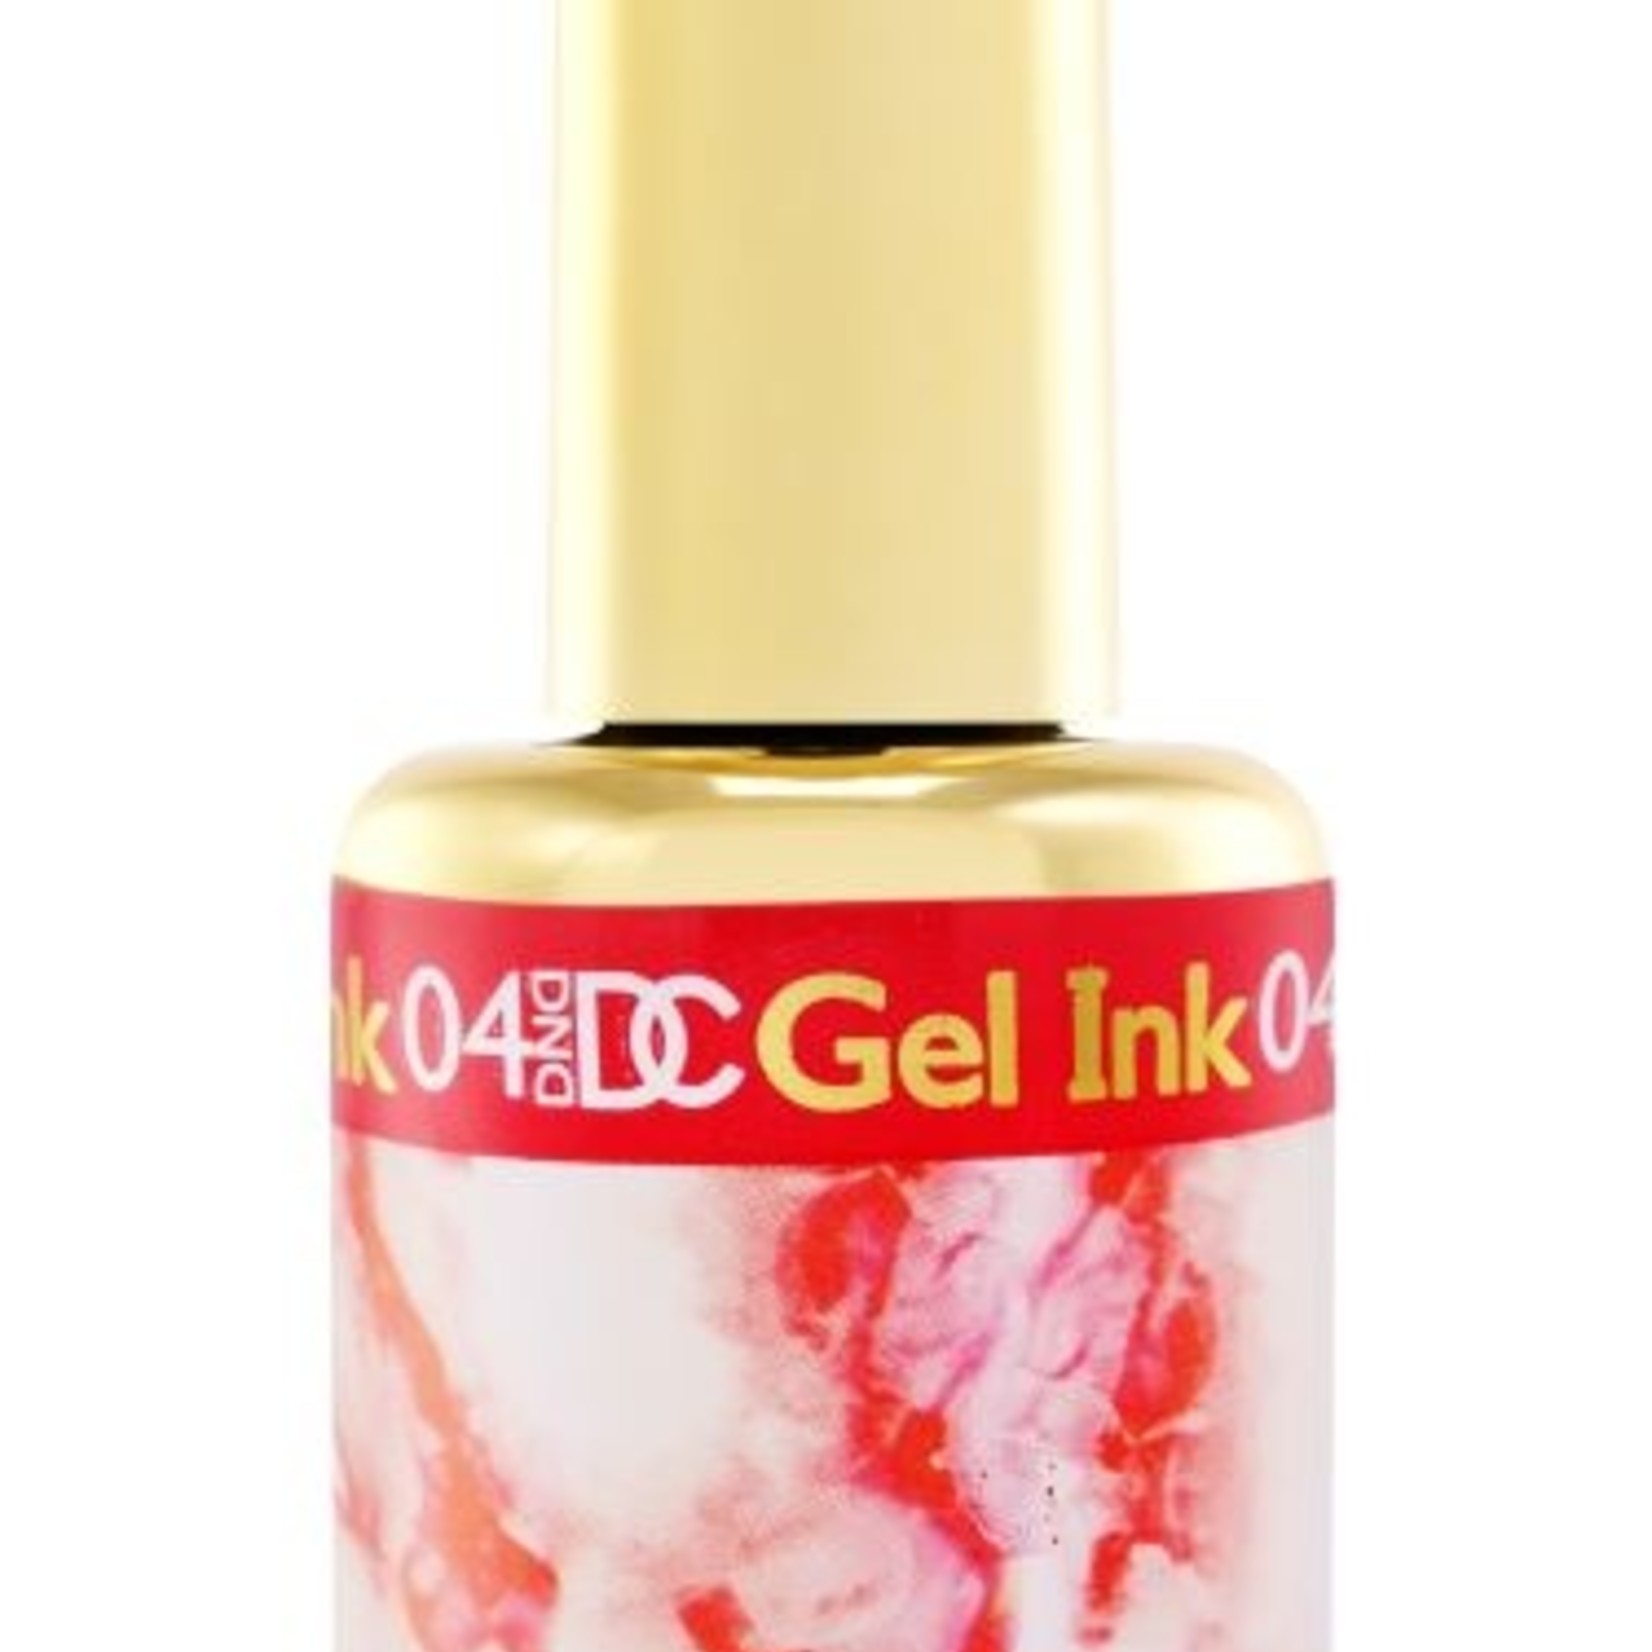 DC - Marble Gel Ink - 04 - Red - .6 fl oz